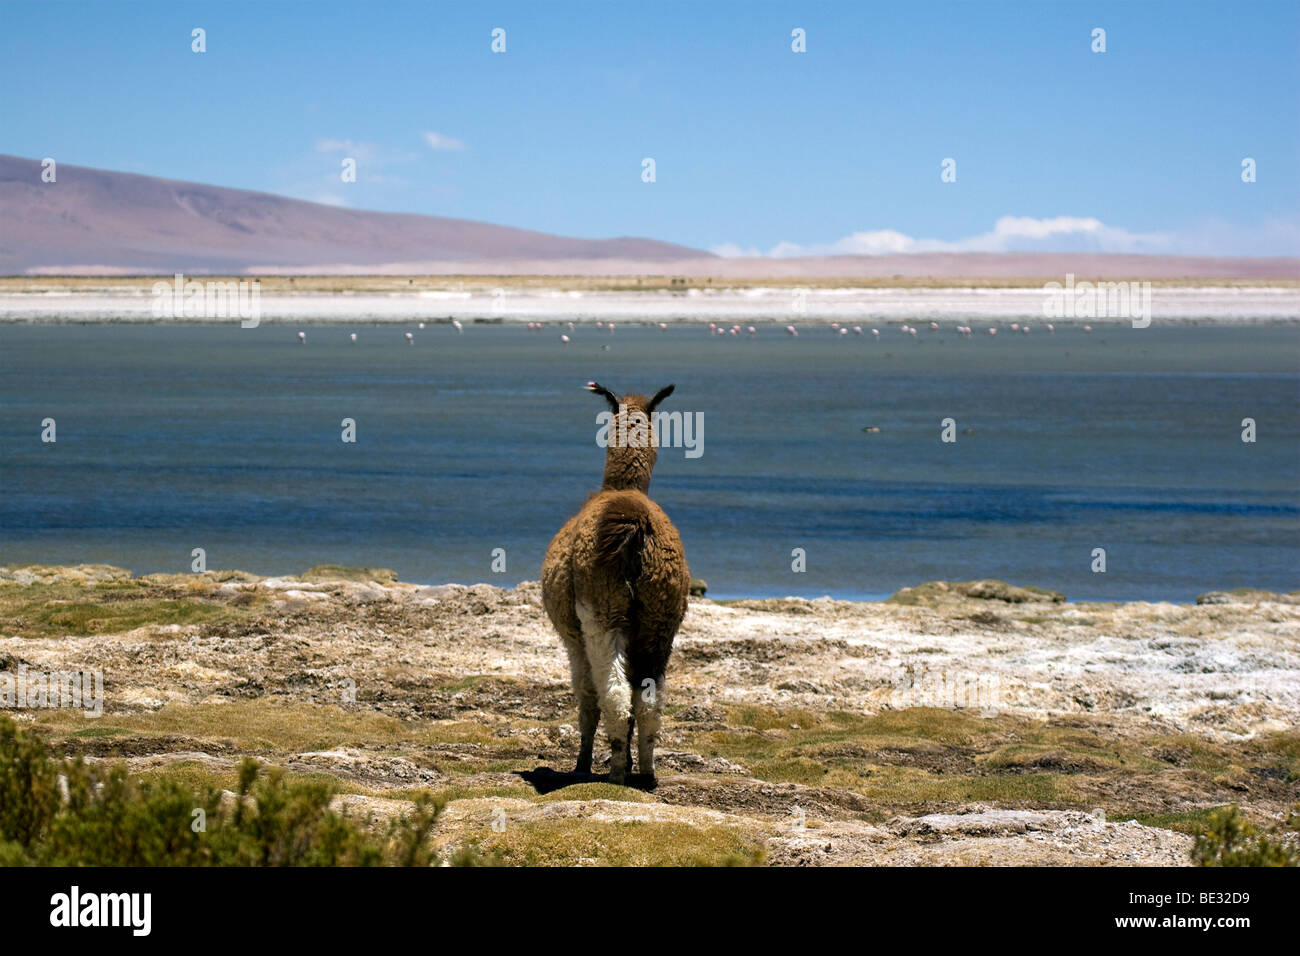 Llama looking out over Salar de Tara, with flamingos in the distance, Atacama Desert, Chile Stock Photo